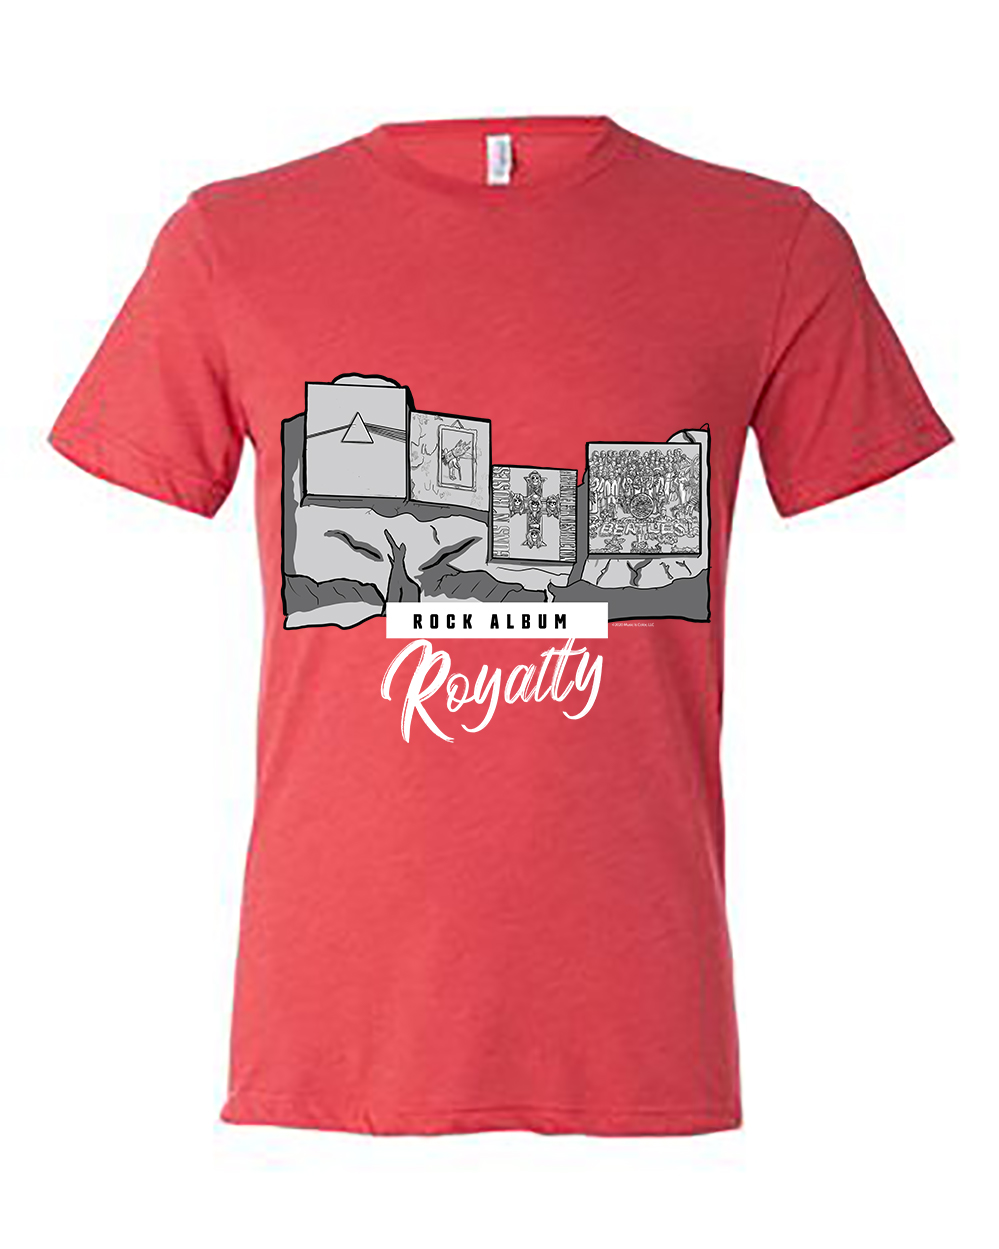 Mount Rushmore - Rock Album Royalty (Red Triblend)